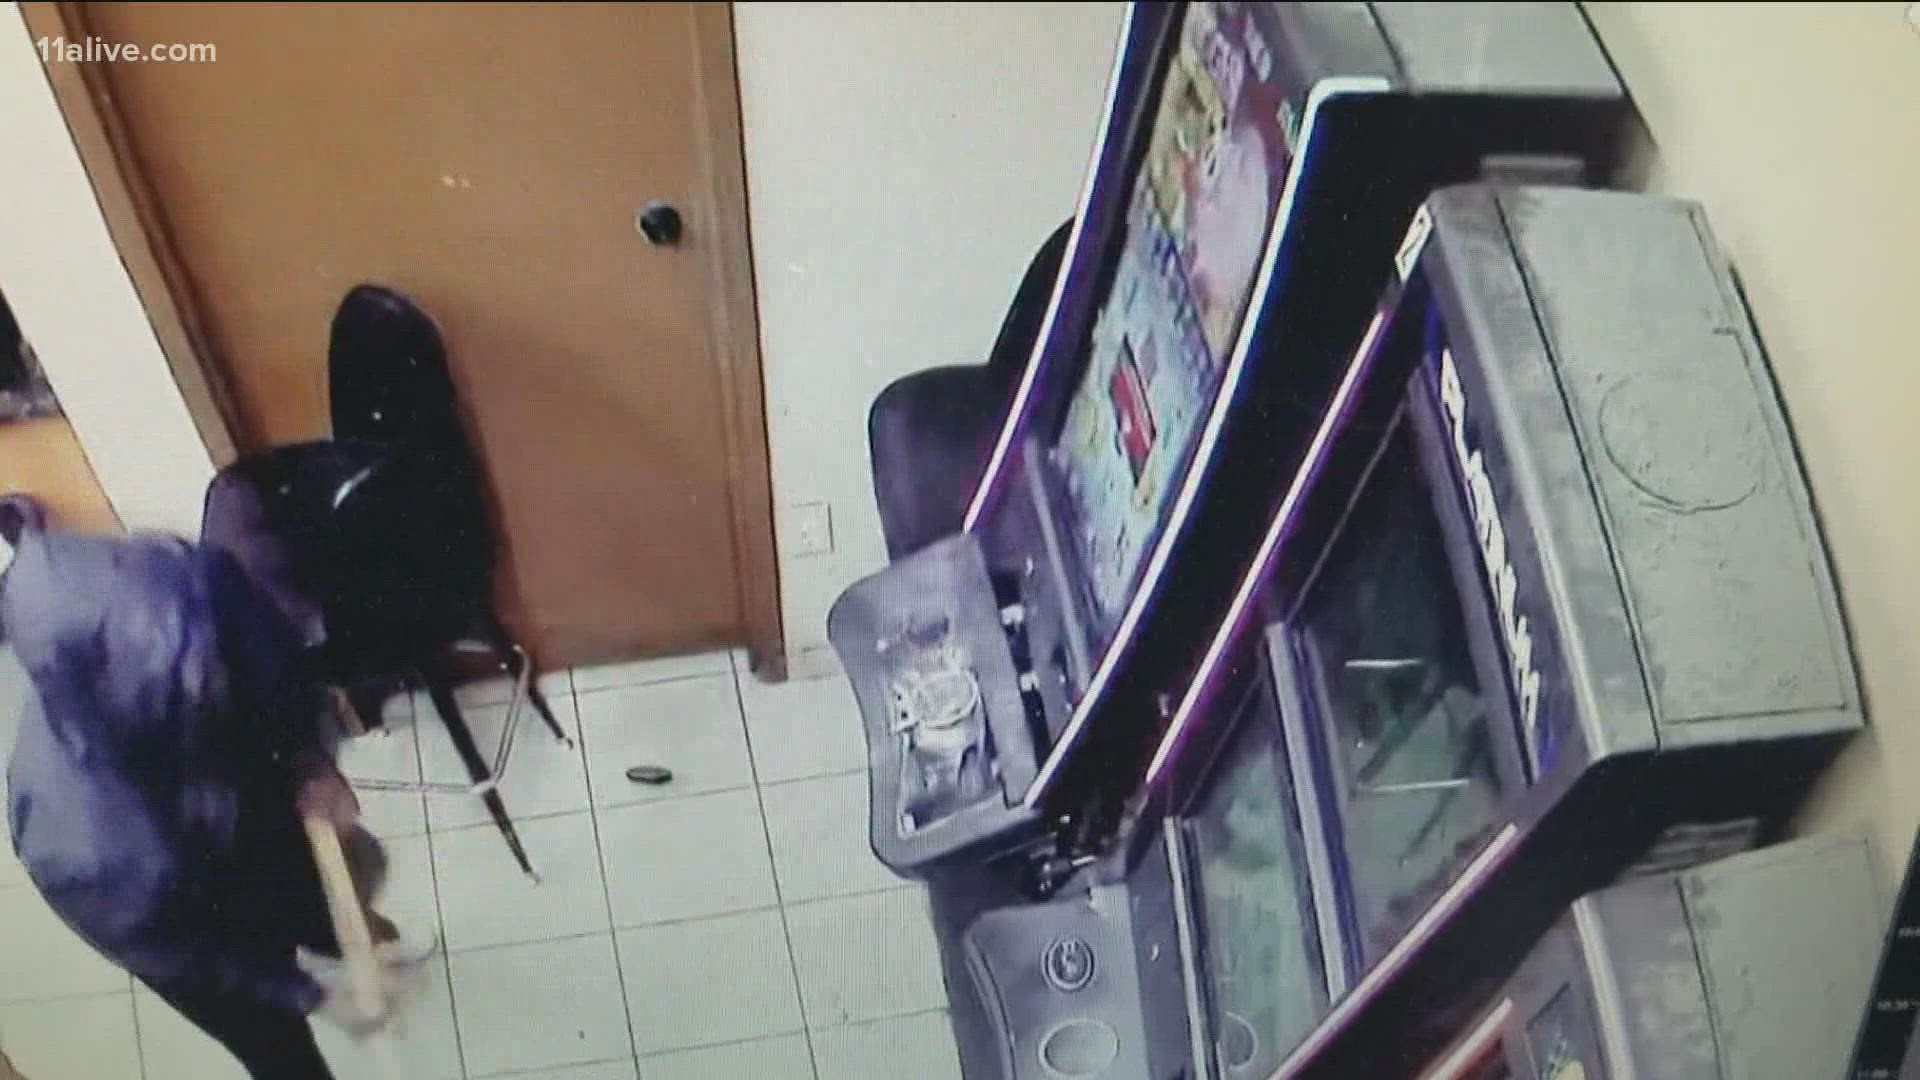 Investigators shared this surveillance video from the burglary.